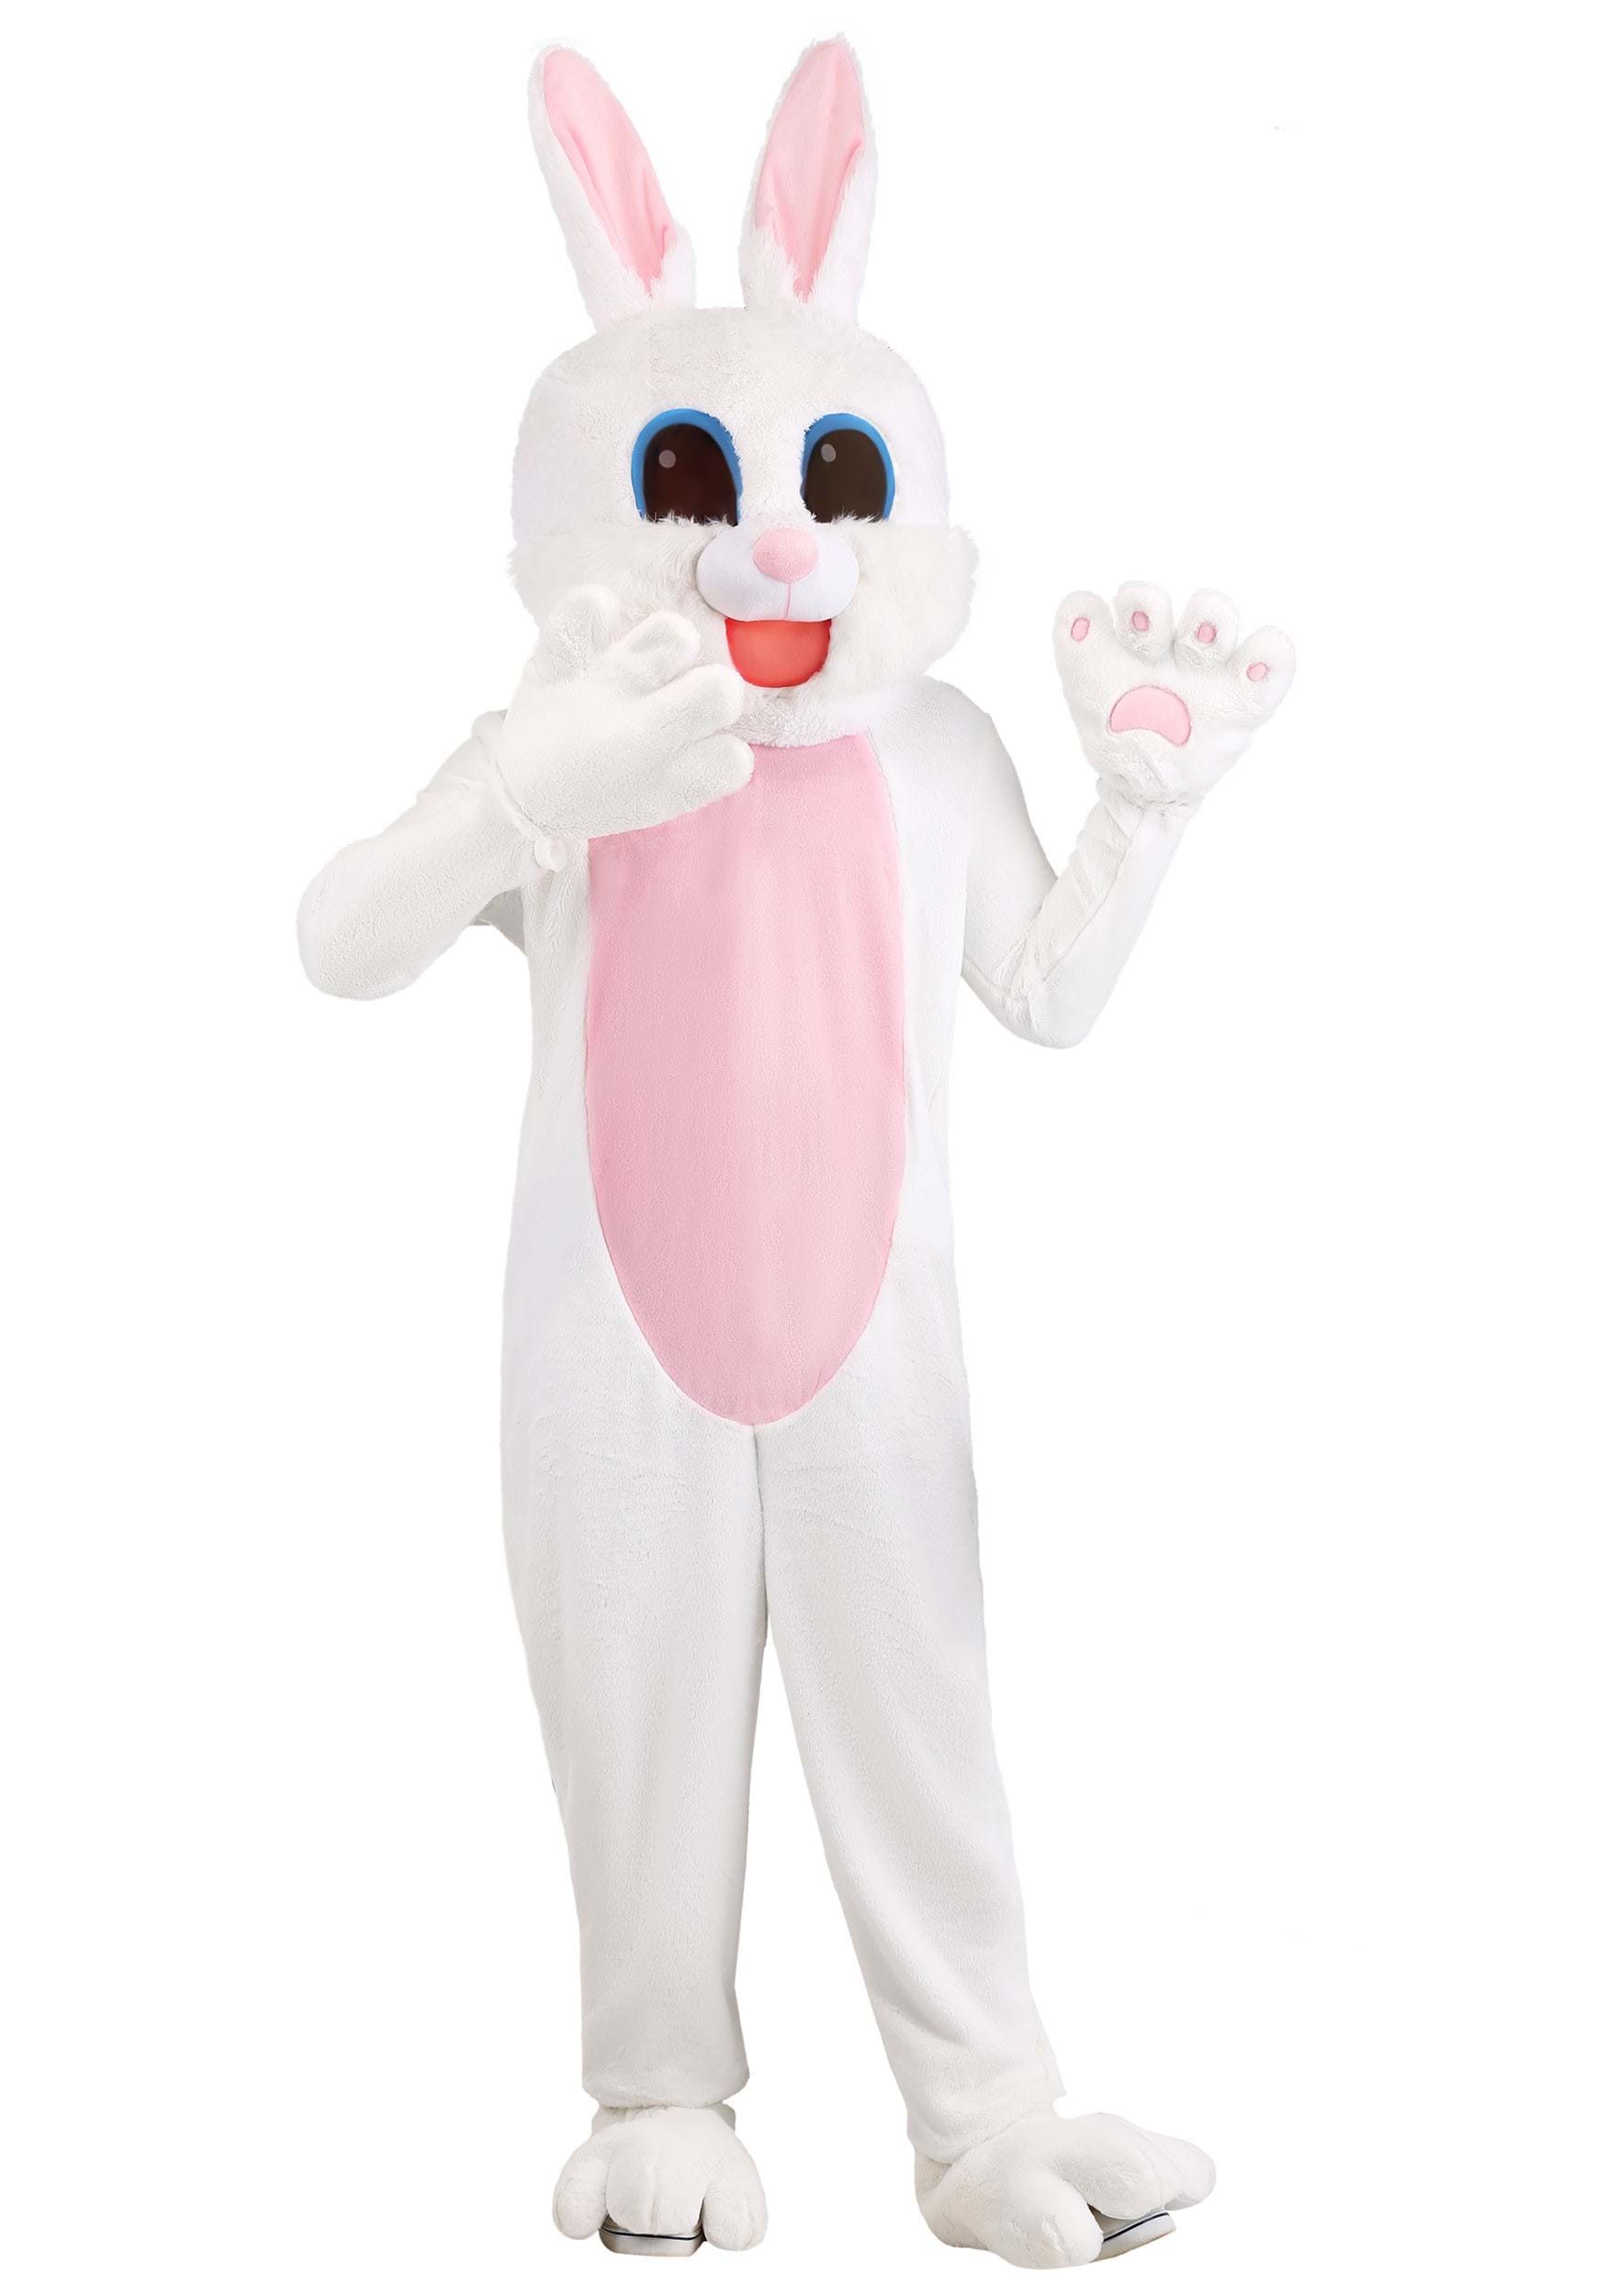 Photos - Fancy Dress FUN Costumes Mascot Easter Bunny Plus Size Costume Pink/White FUN7071P